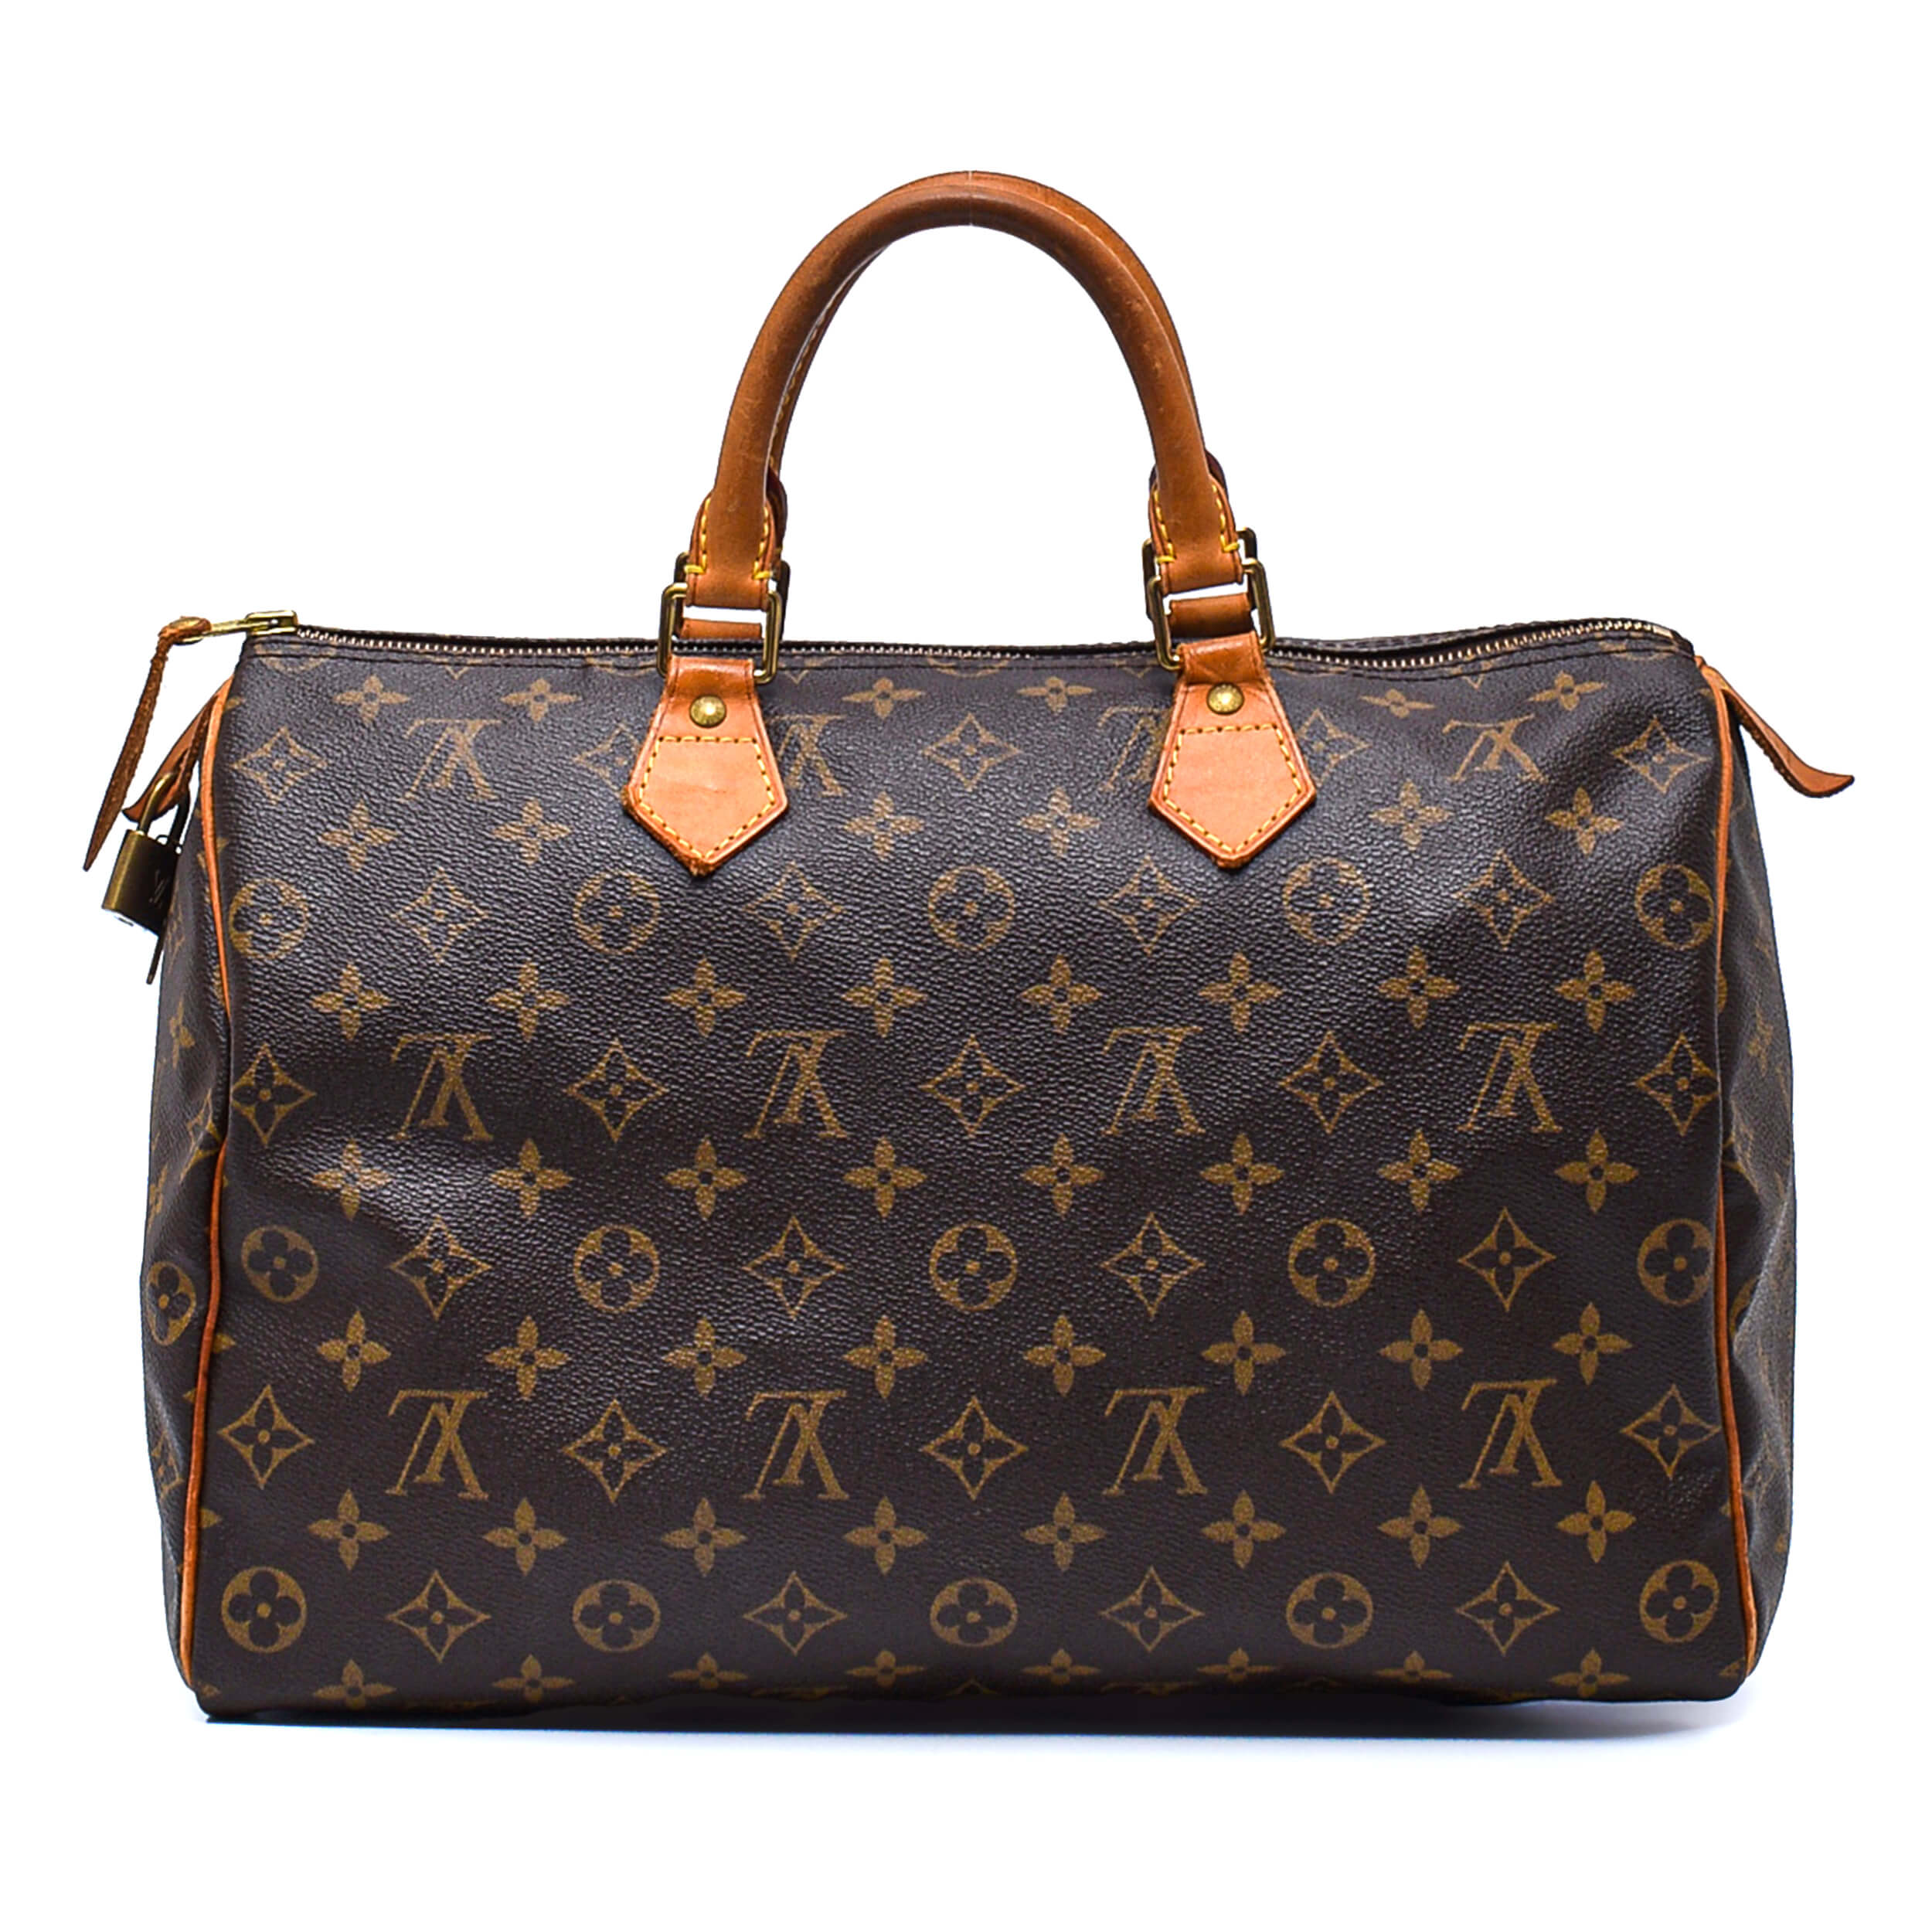 Louis Vuitton - Monogram Canvas Speedy 35 Bag